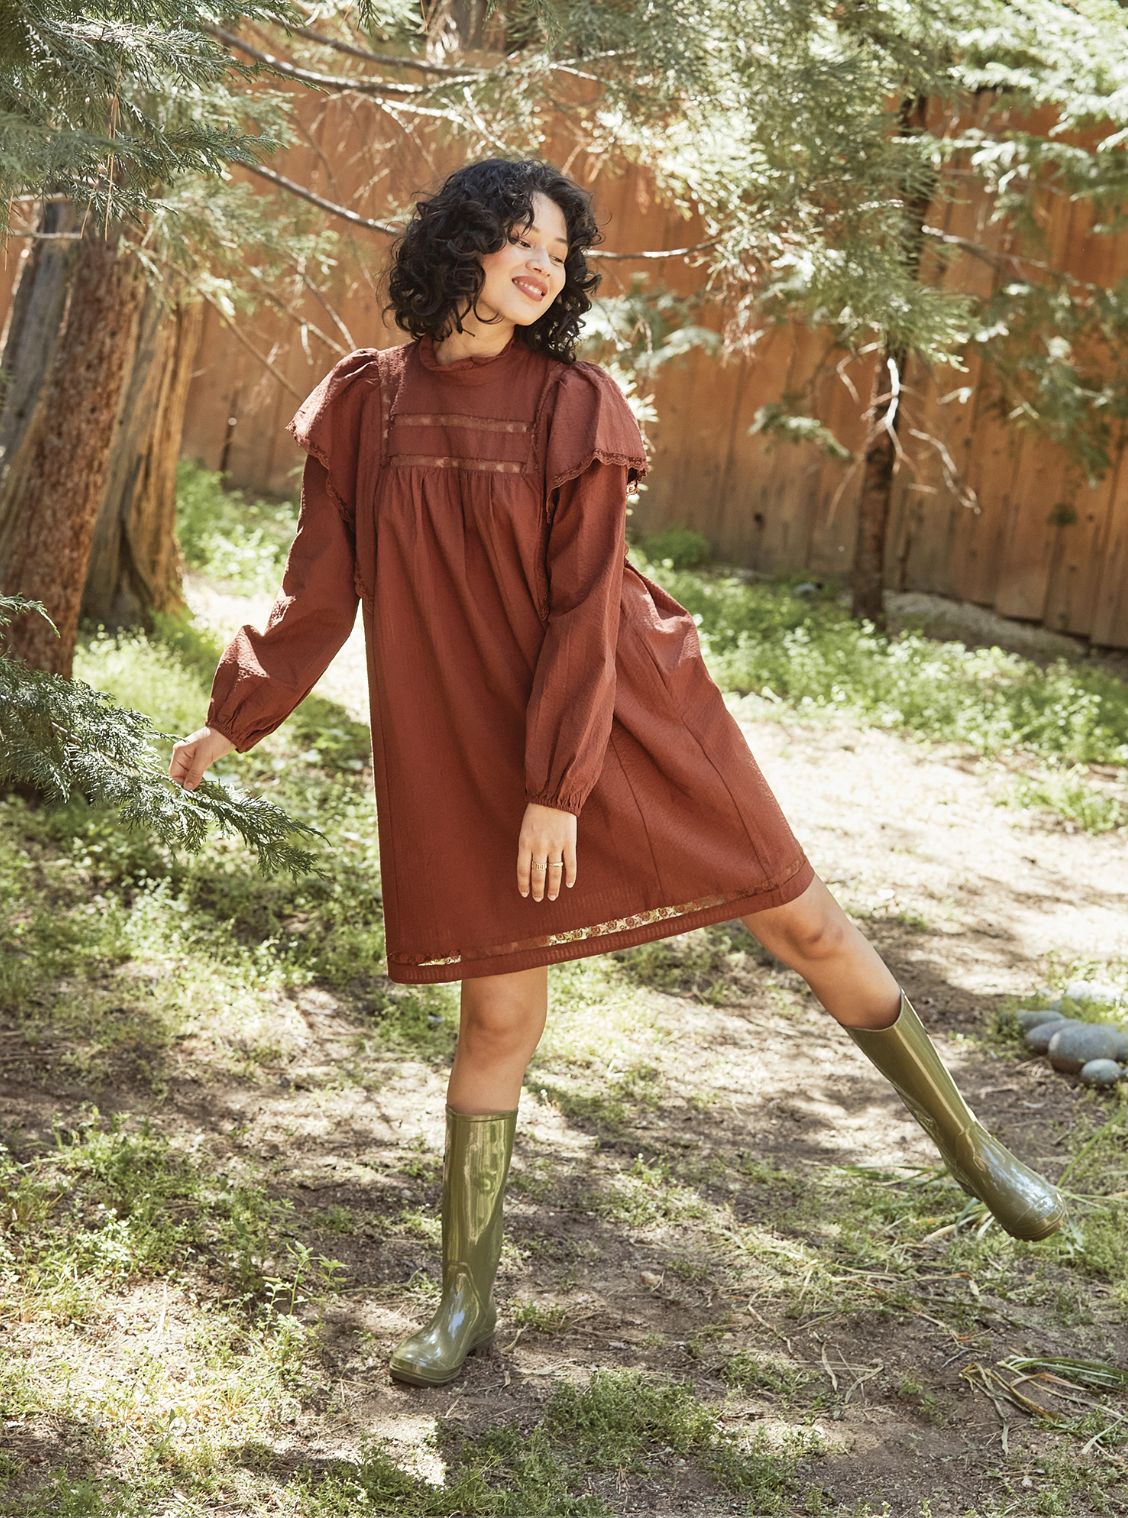 model wearing the brown dress in a lawn